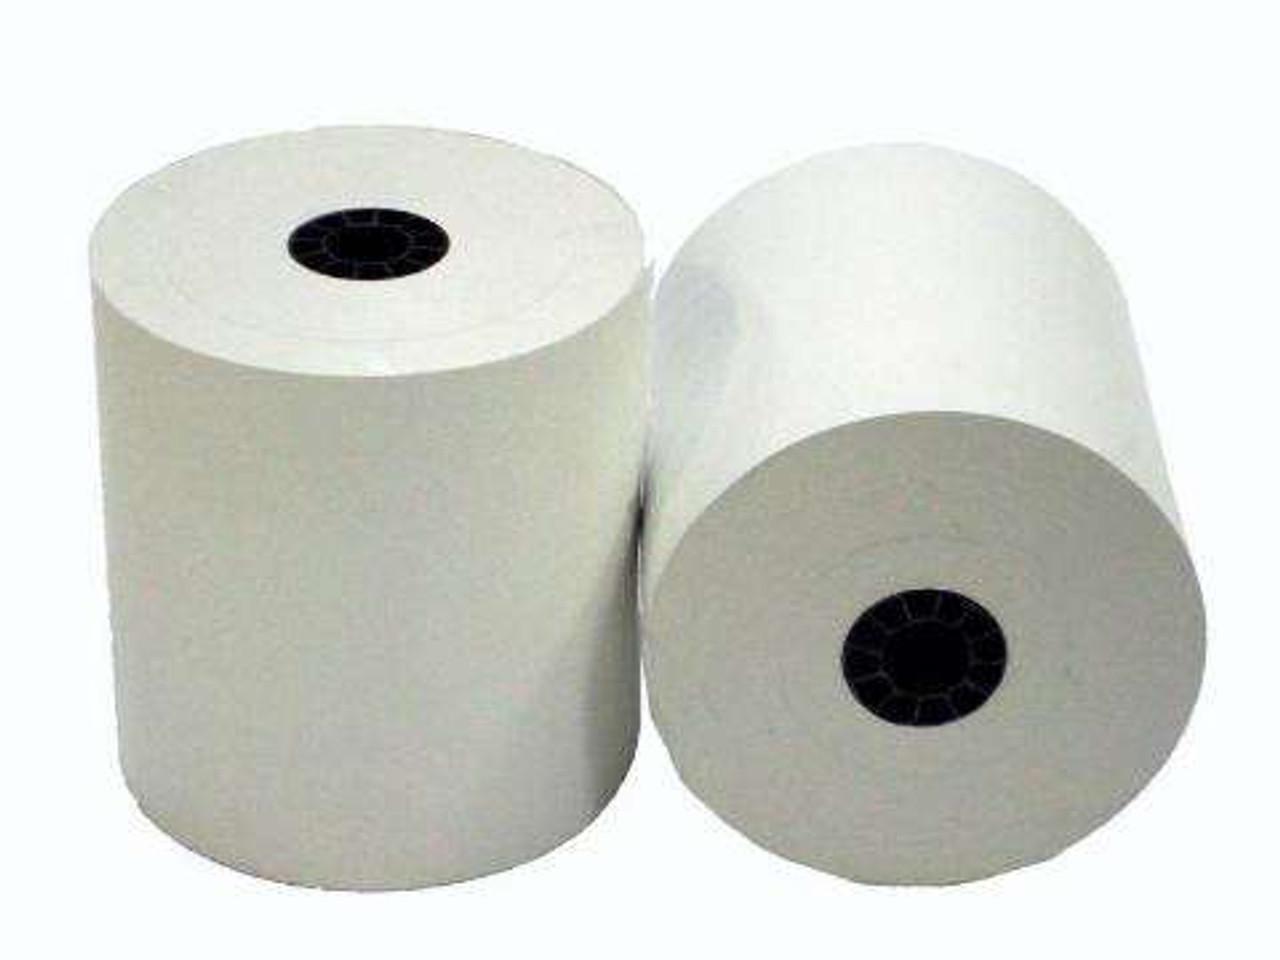 Seiko RP-E10 Thermal Paper Rolls